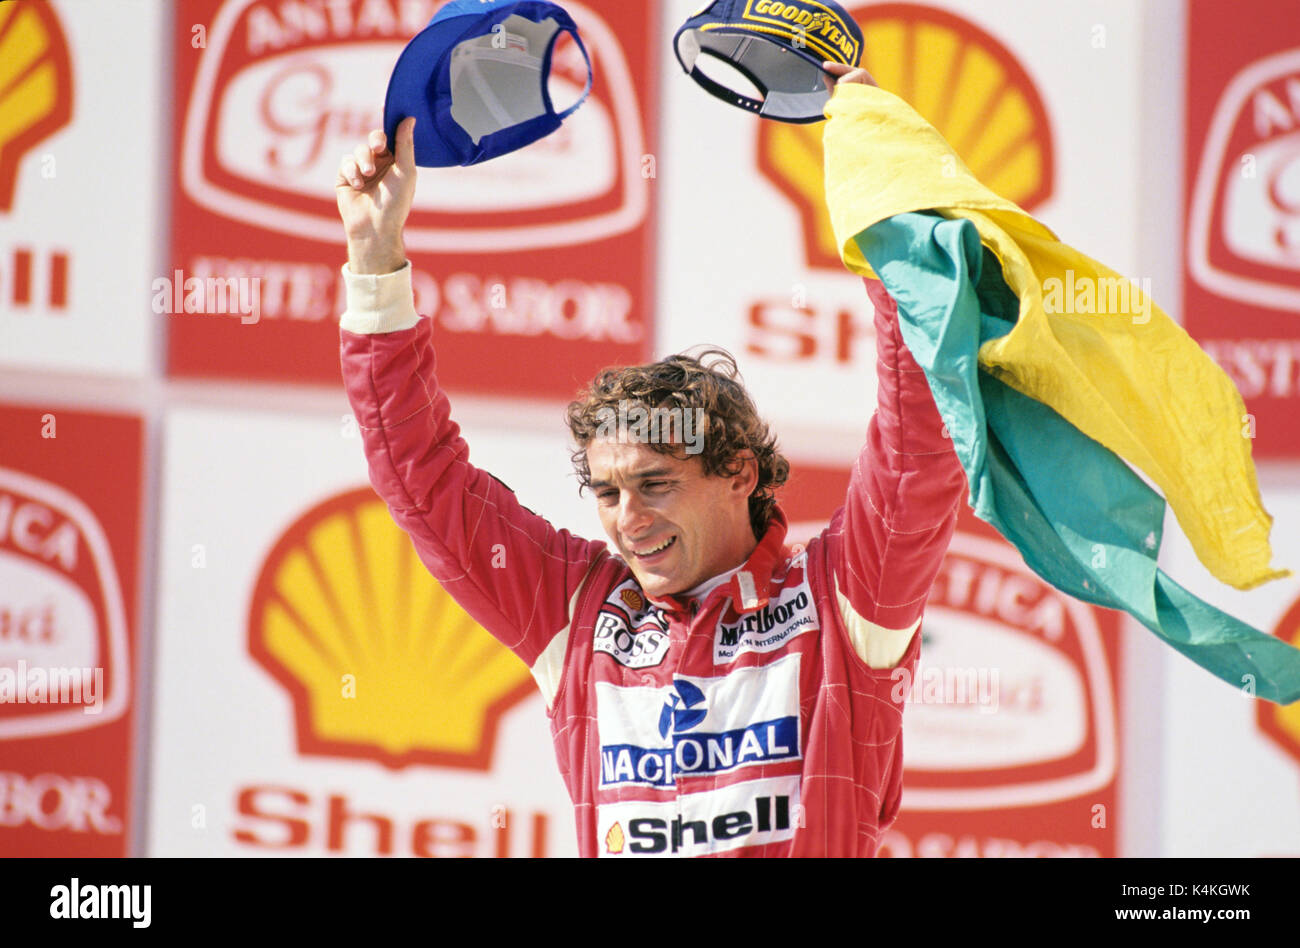 SENNA (2010) Ayrton Senna Asif Kapadia (DIR) UNIVERSAL PICTURES/MOVIESTORE COLLECTION LTD. Stockfoto